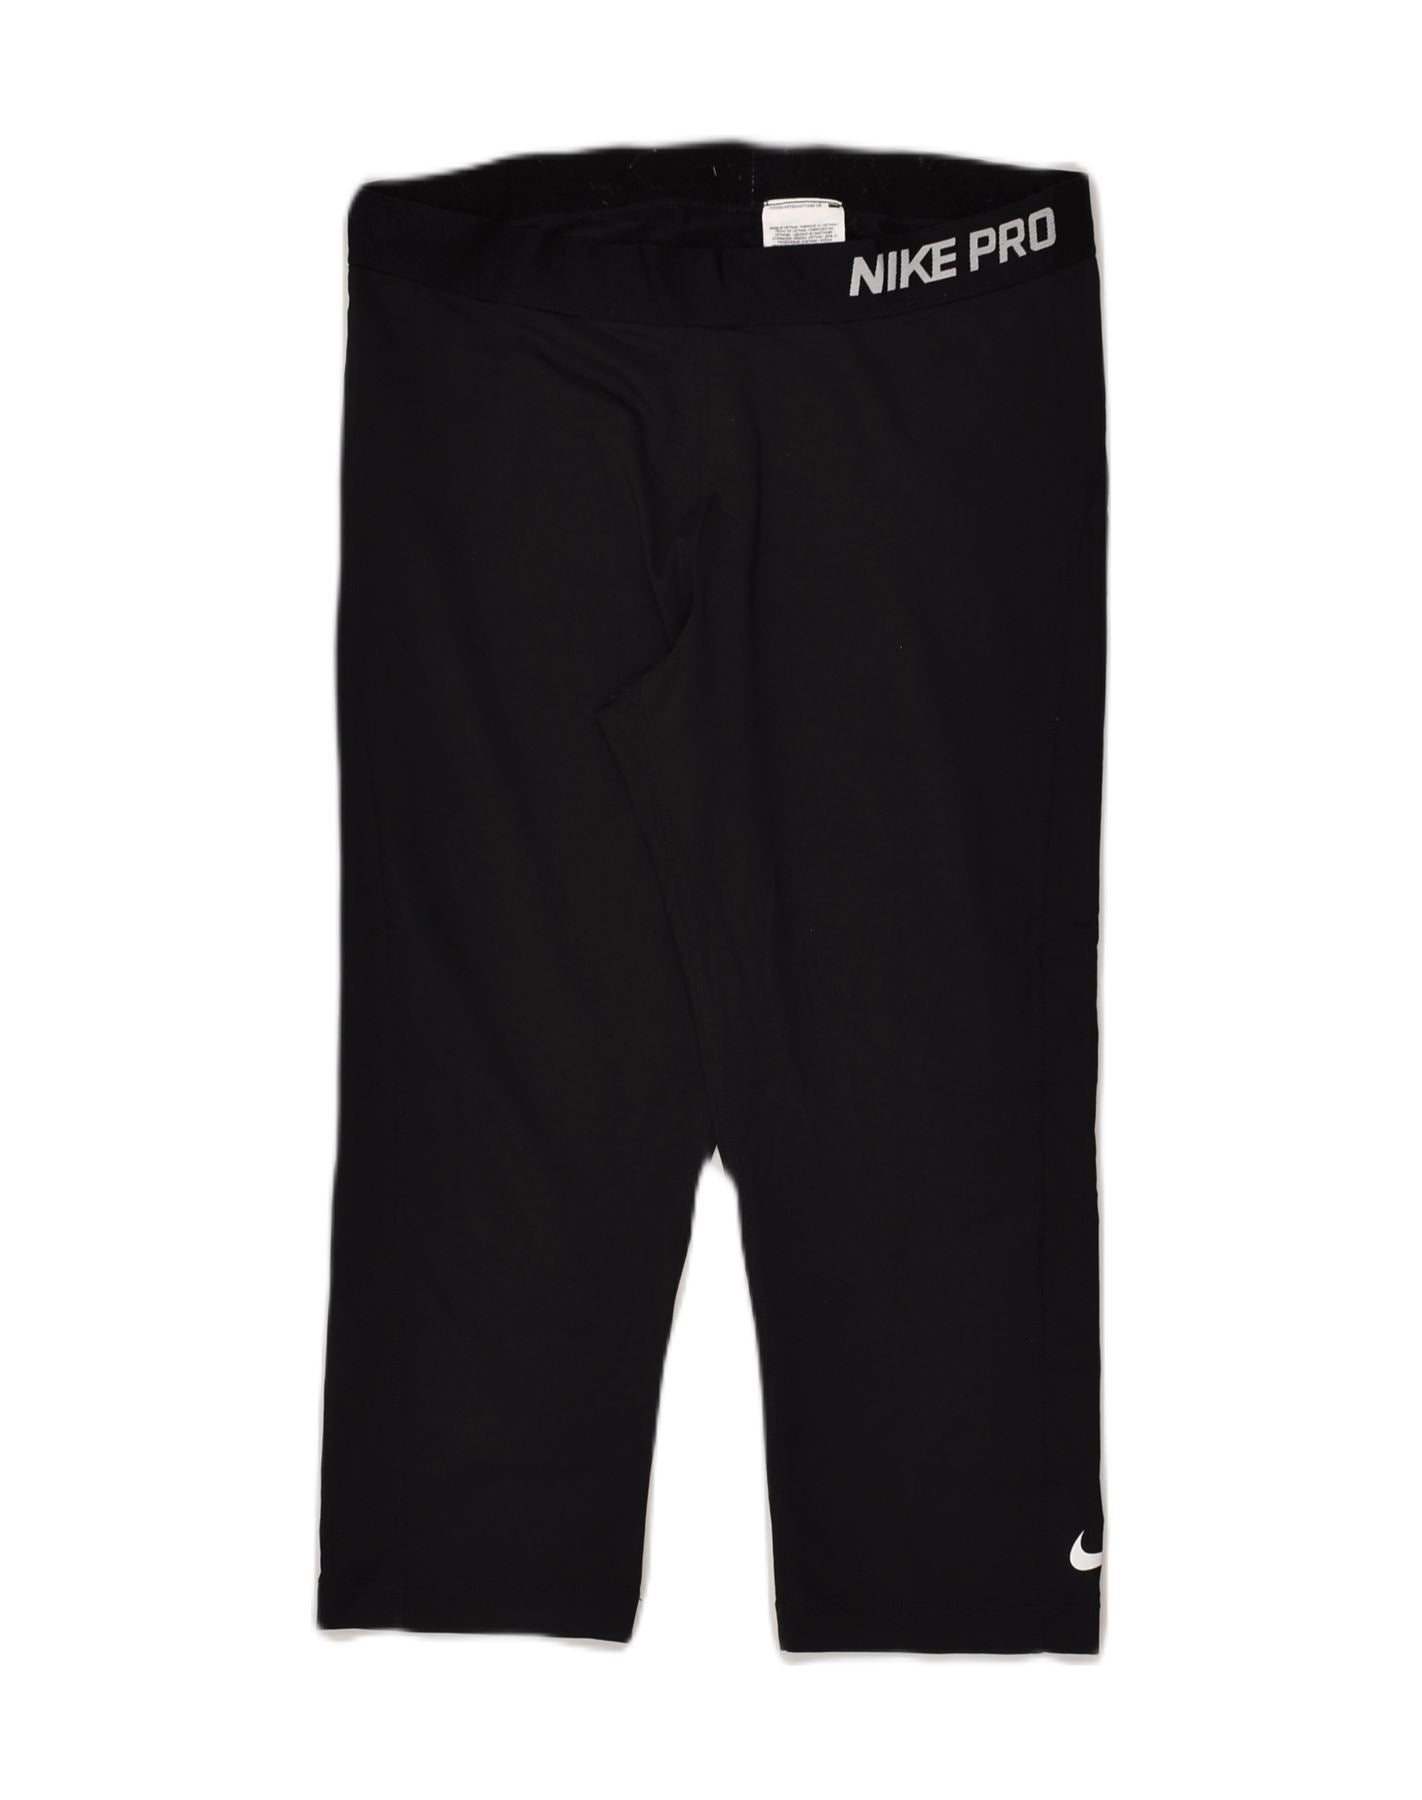 Nike Pro Training capri legging in black